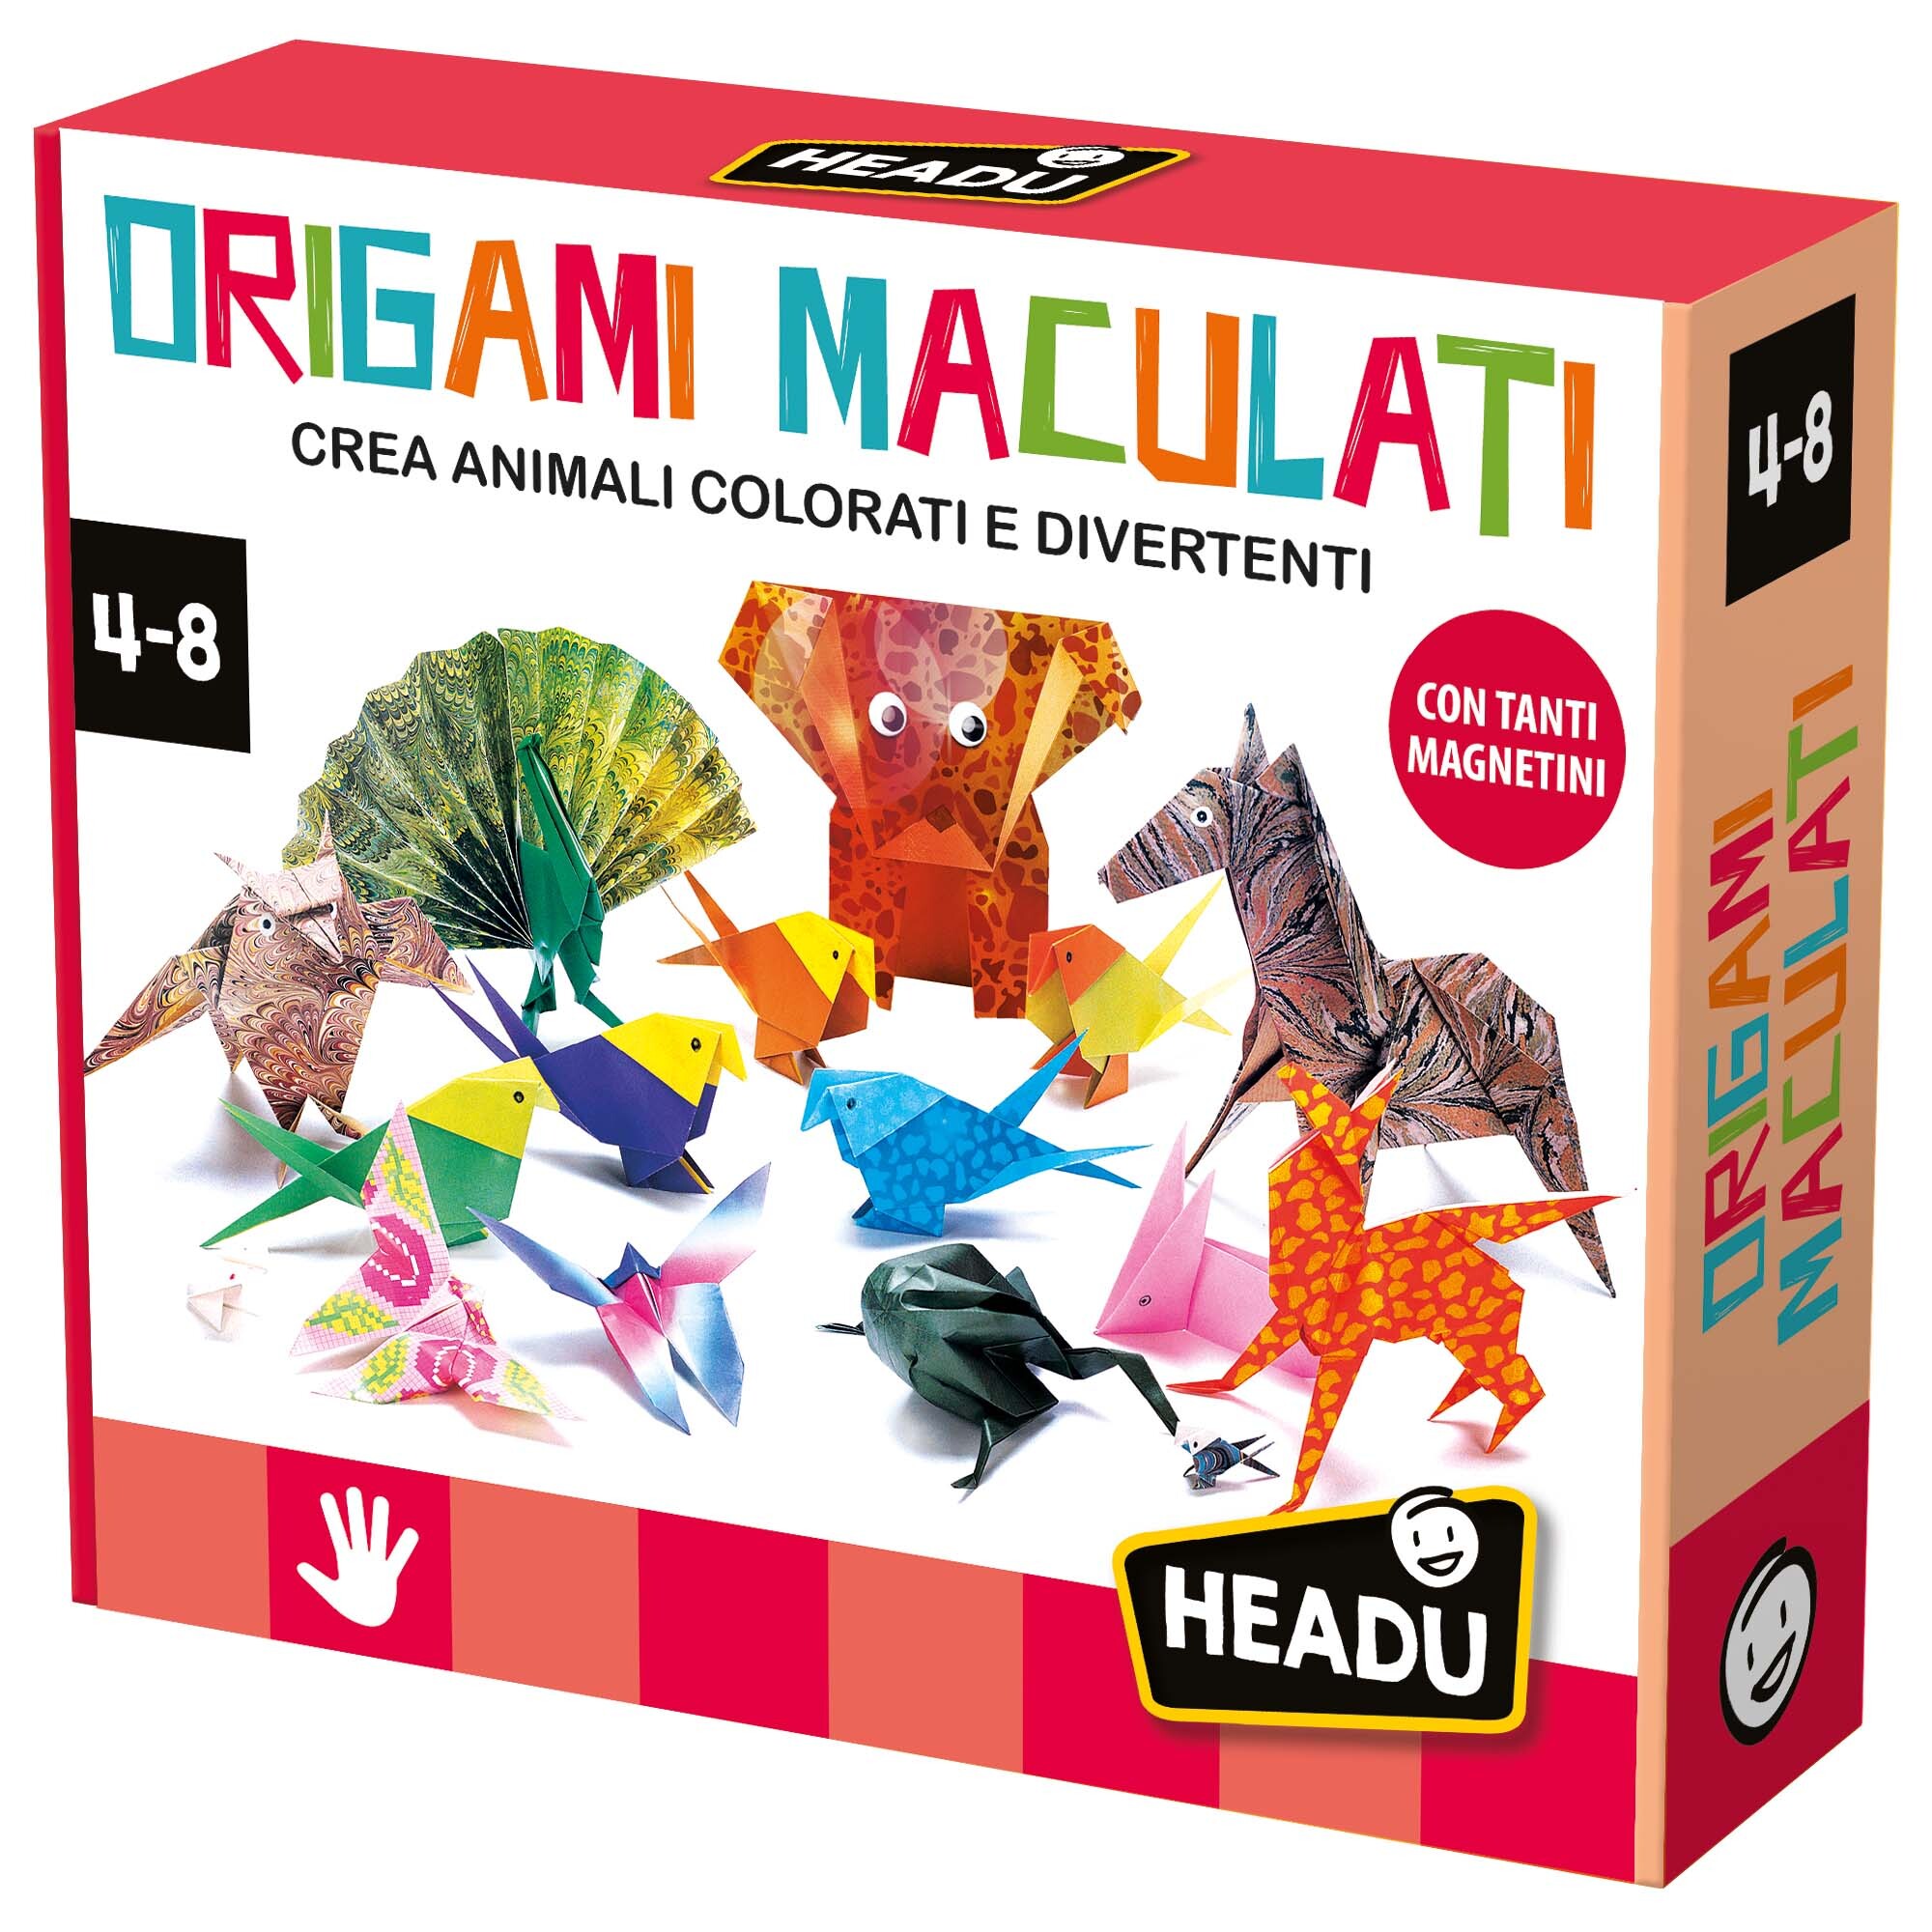 Origami maculati.	crea animali colorati e divertenti.	made in italy.	hand made creations - HEADU